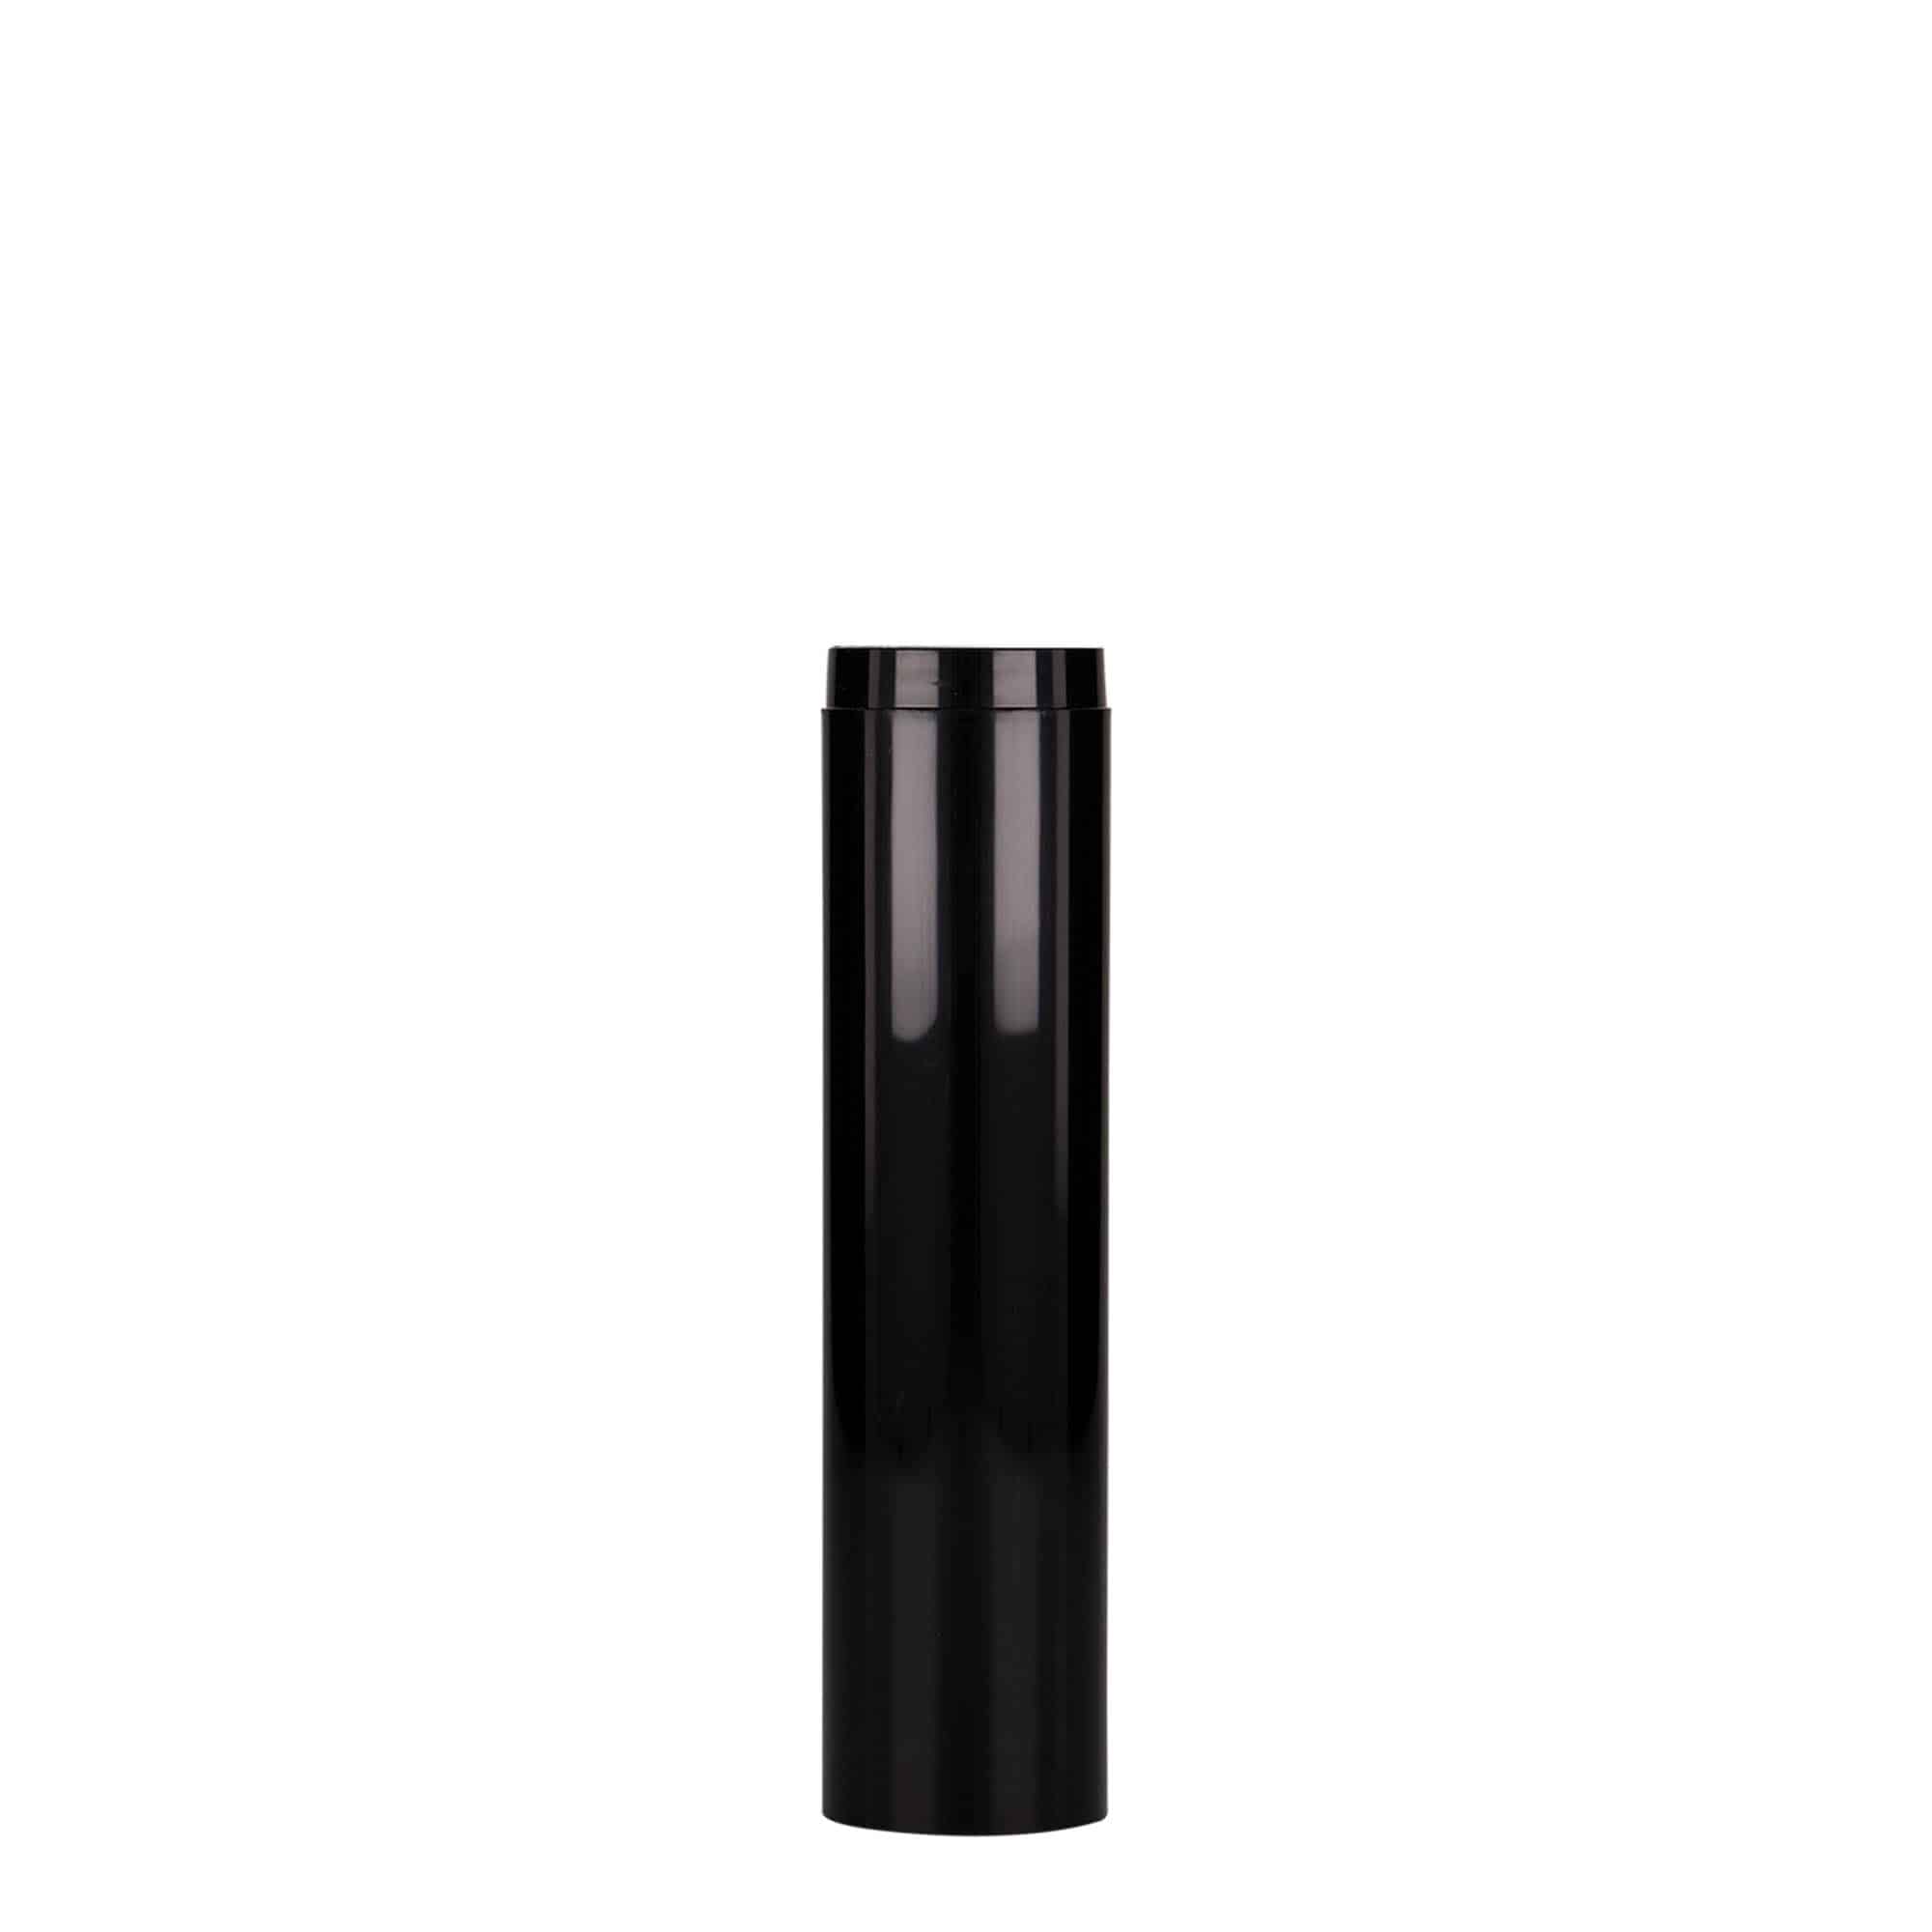 Flacon airless 50 ml 'Micro', plastique PP, noir